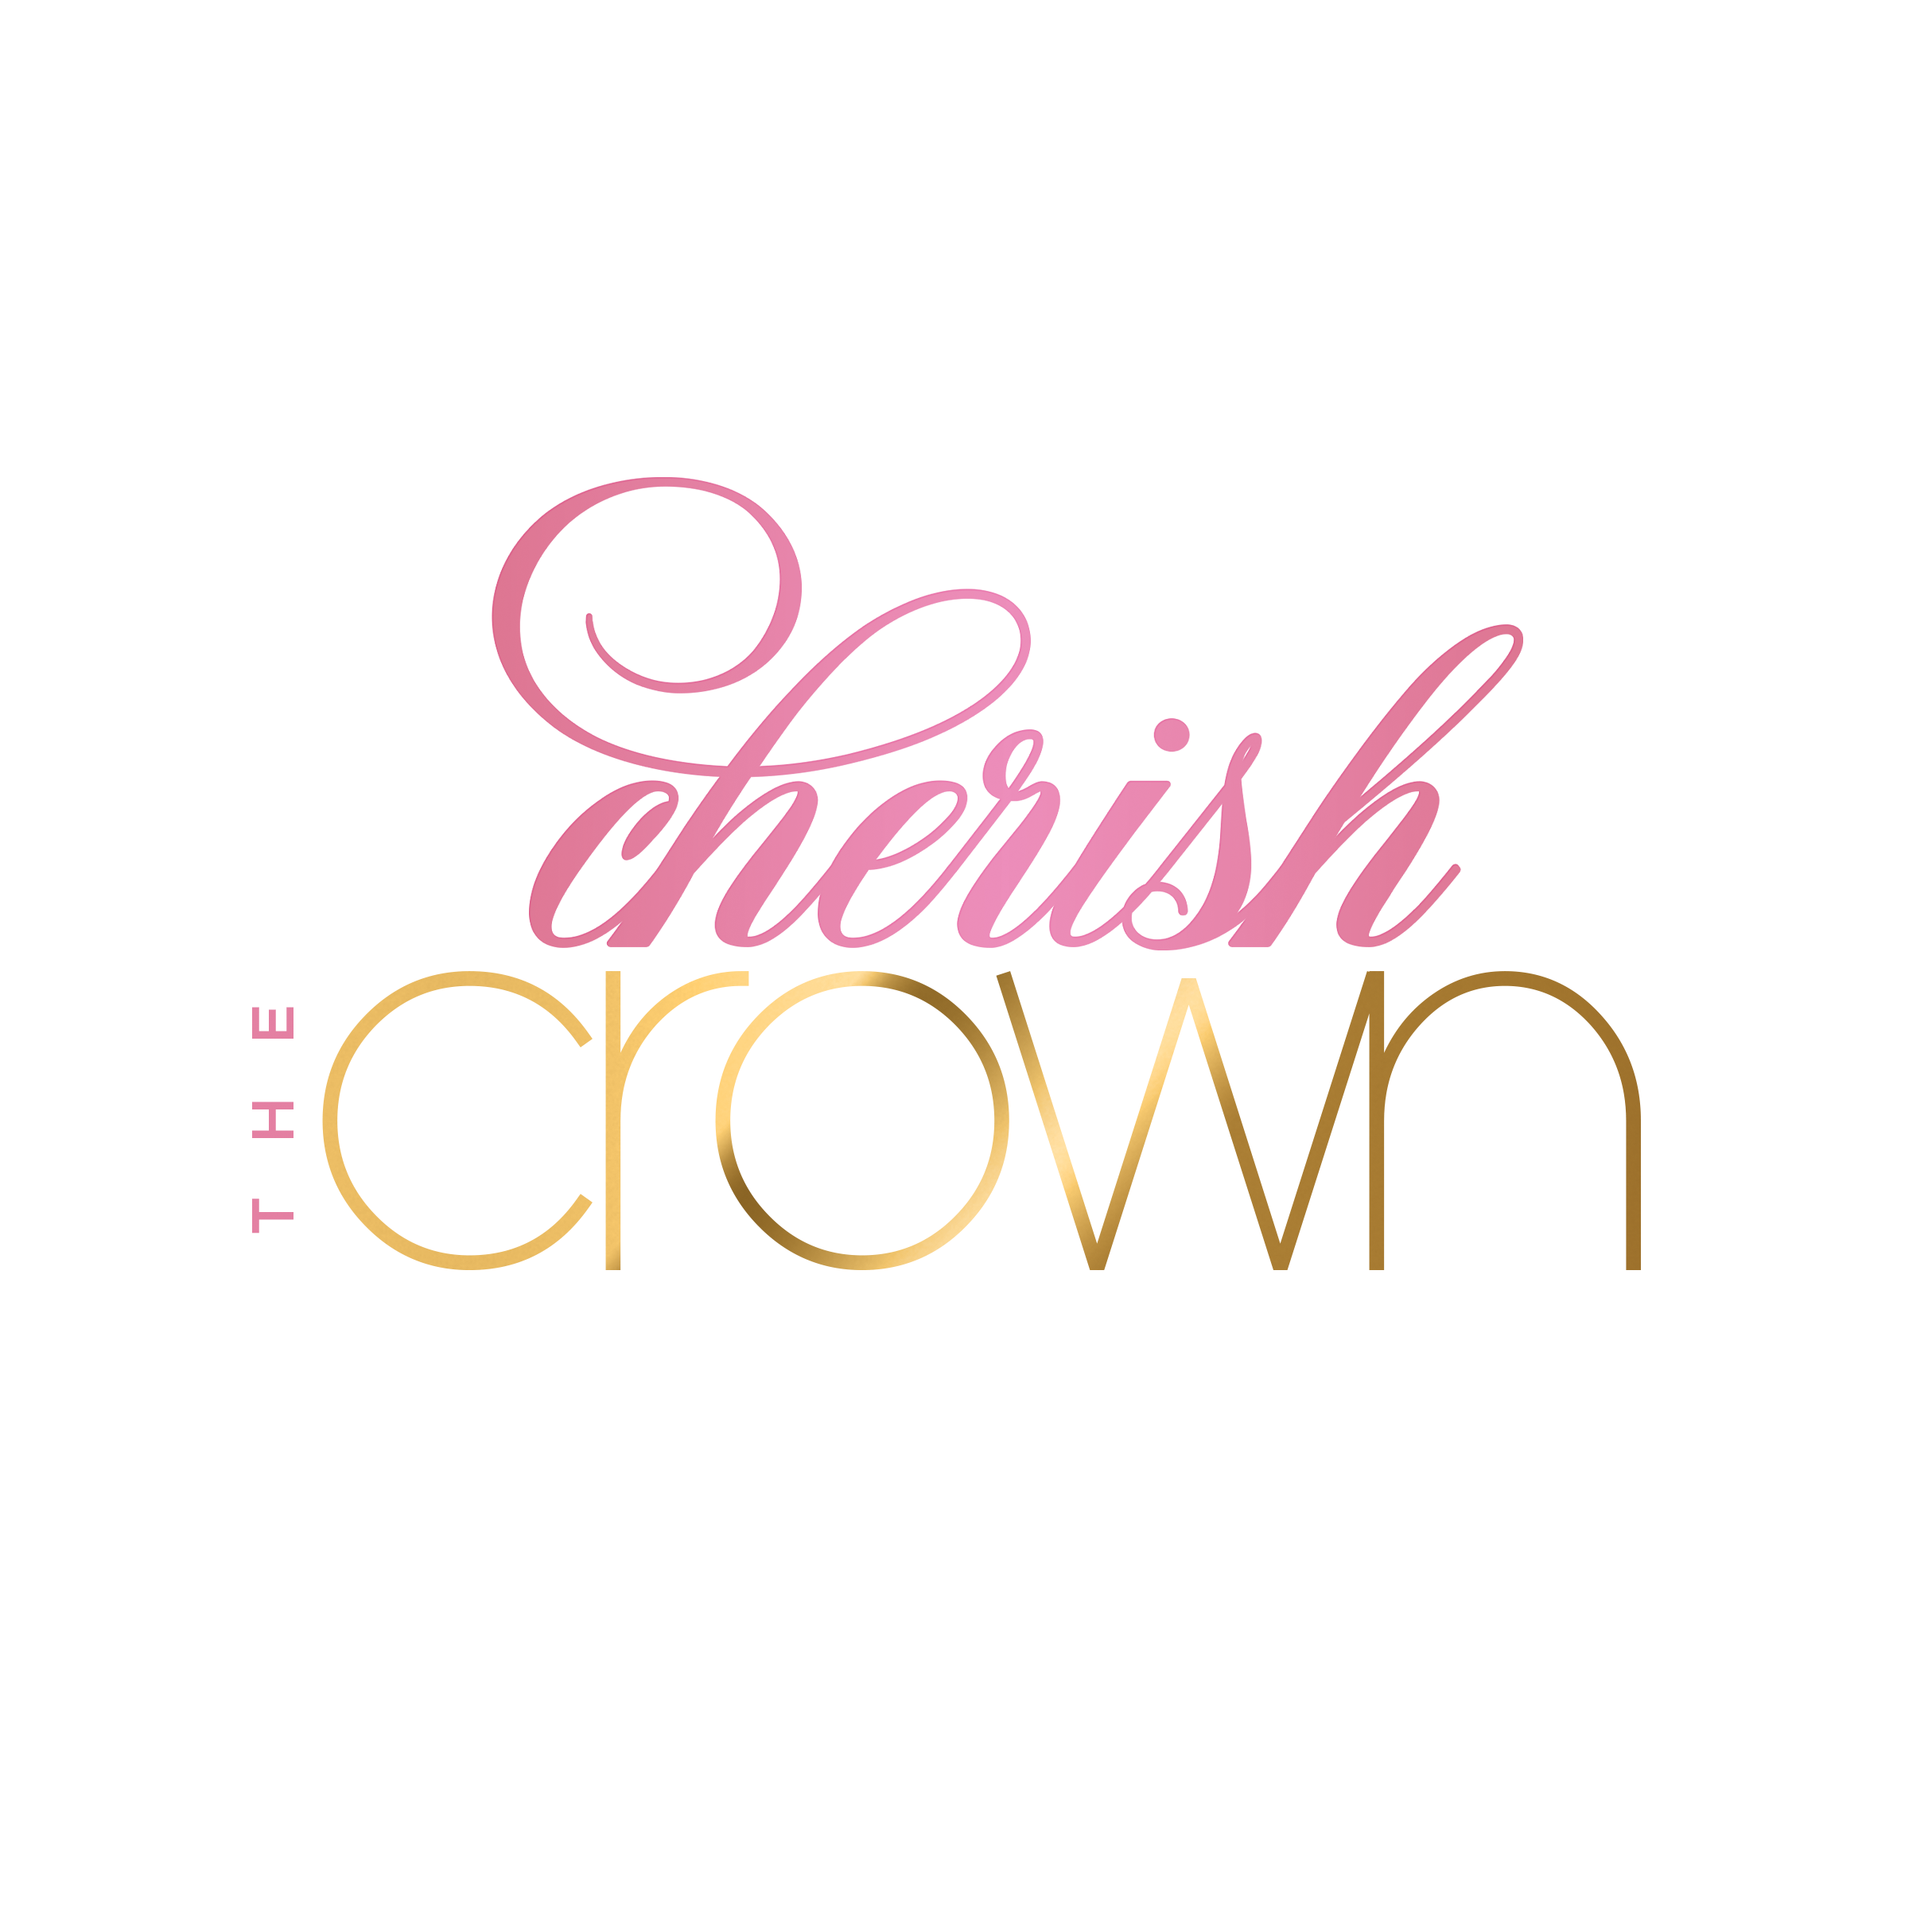 Cherish the Crown